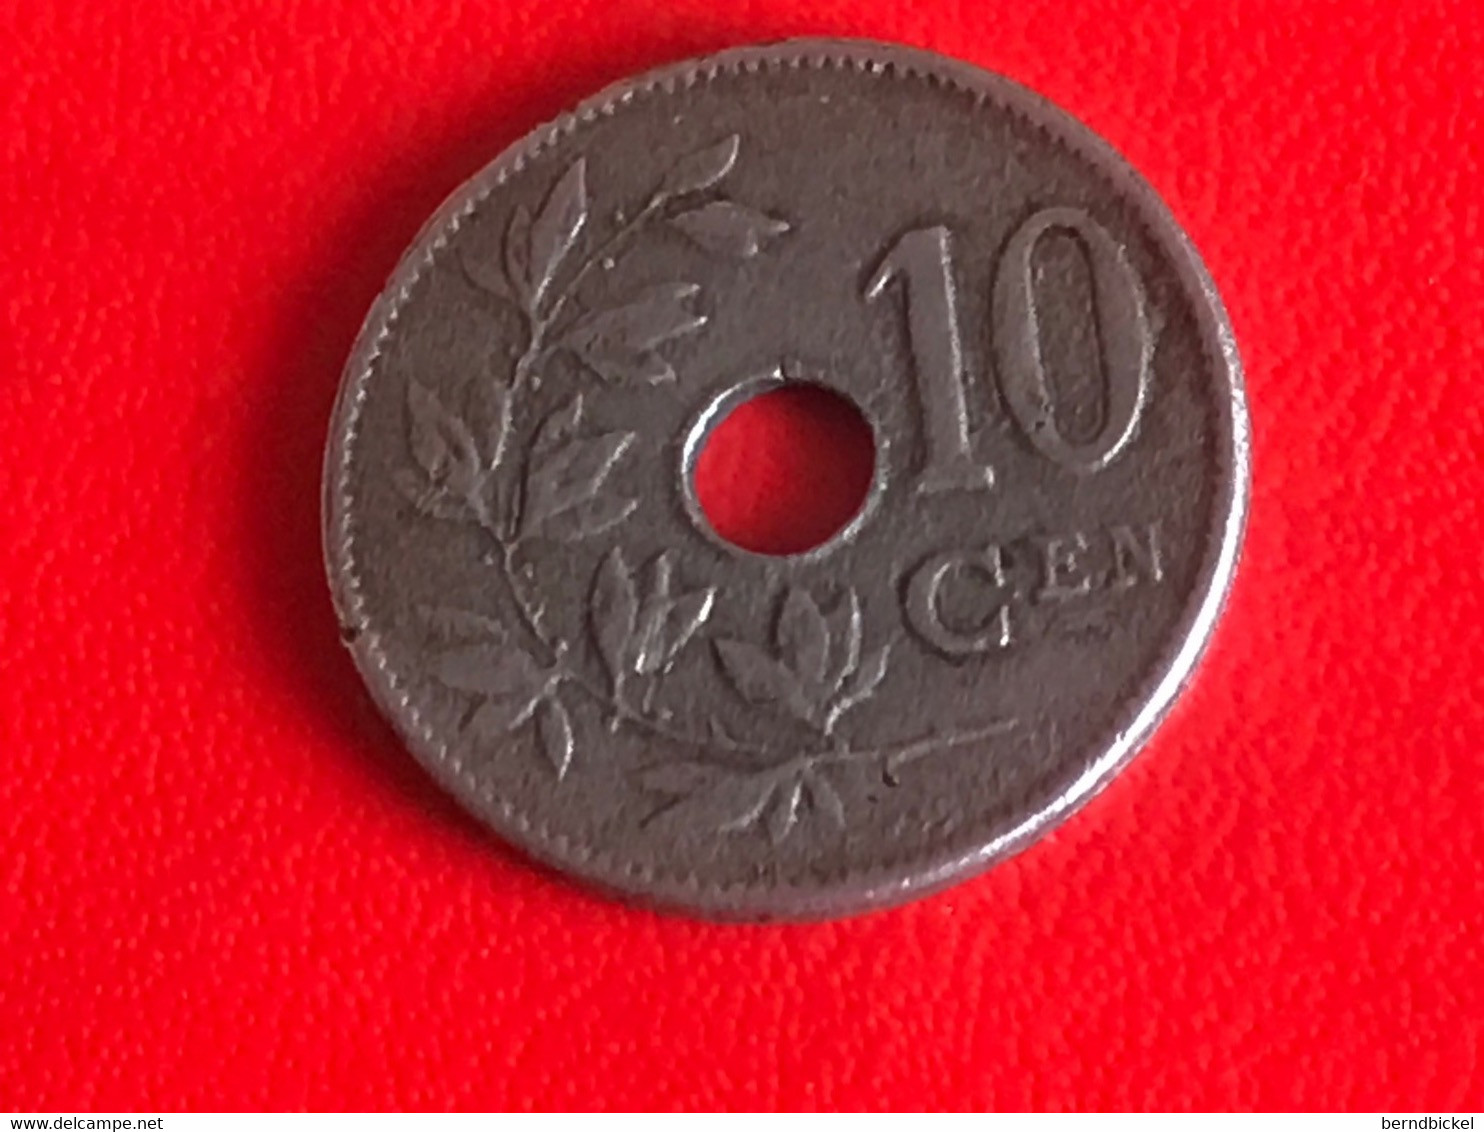 Umlaufmünze Belgien 10 Centimes 1905 Belgie - 10 Cents